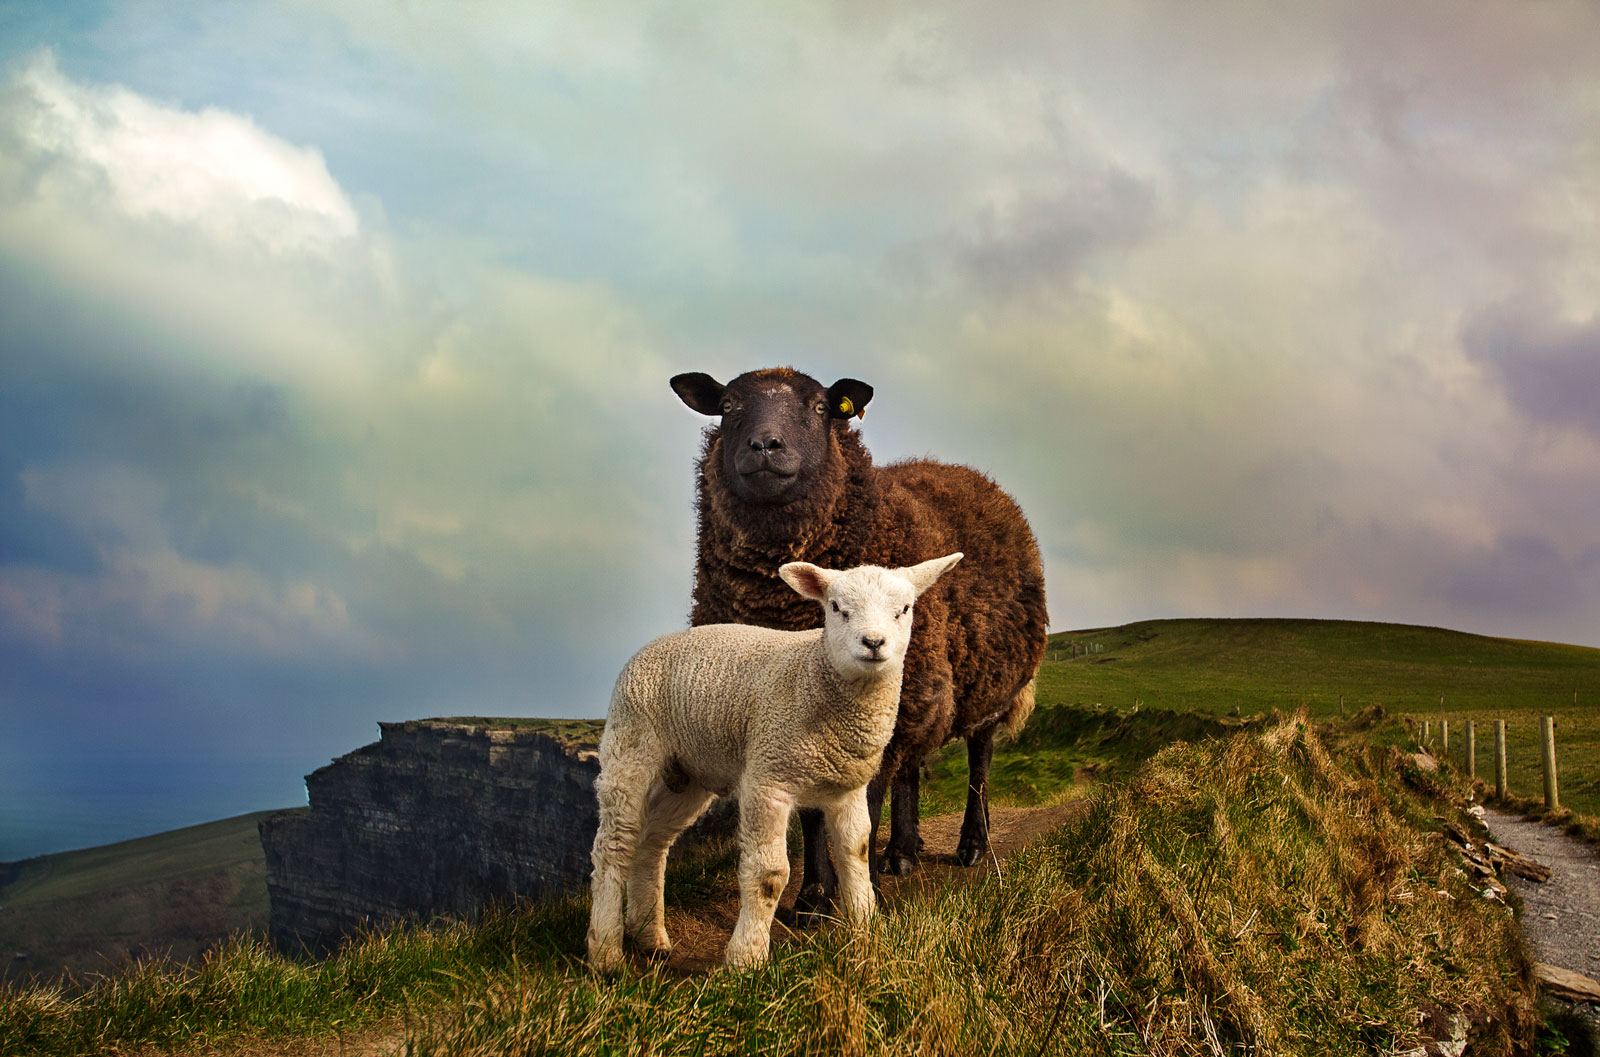 Black sheep with white lamb